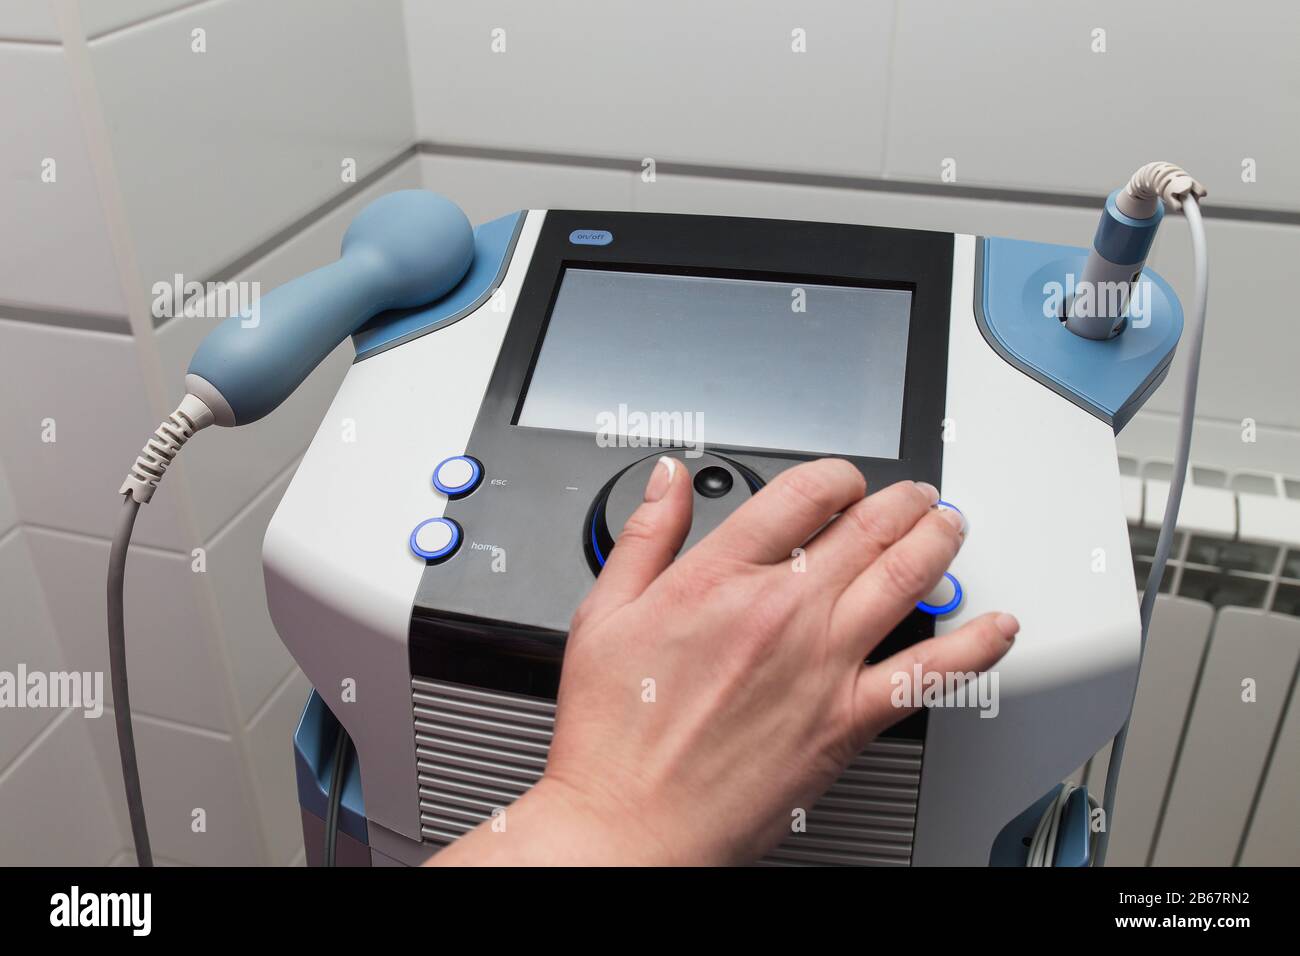 Ultrasound Therapy Machine, Medical Ultrasound Device